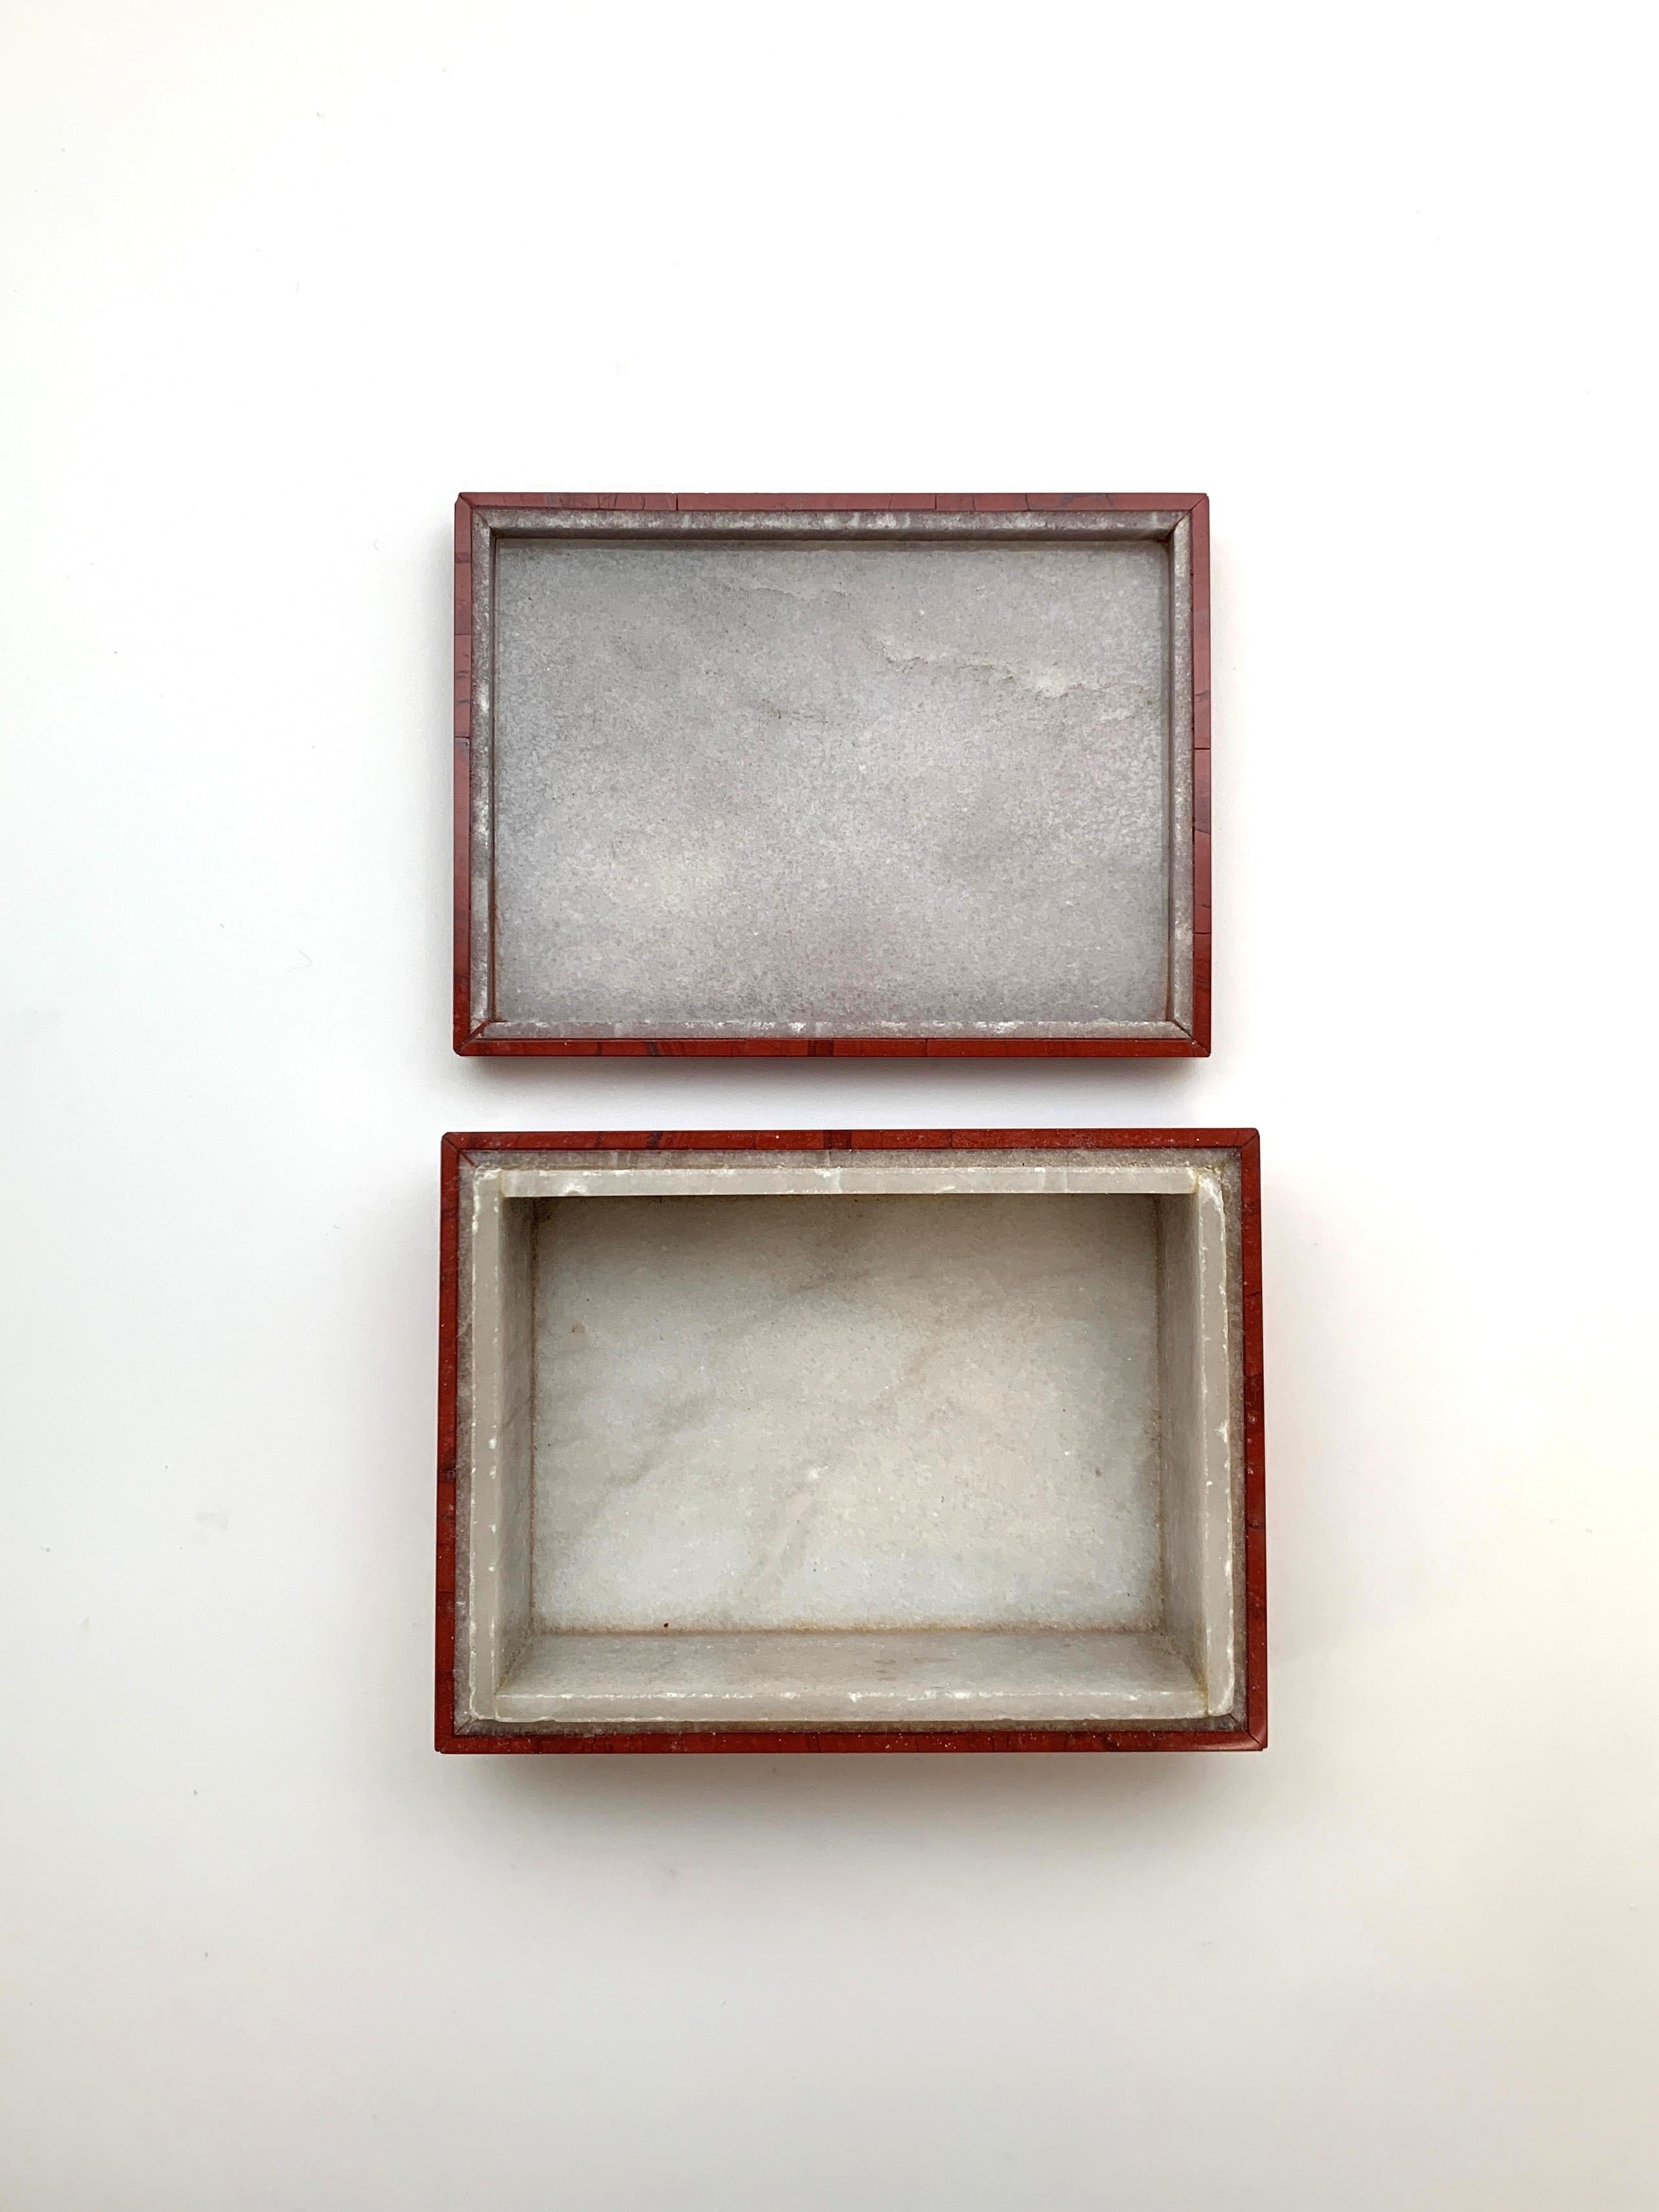 Square Cut Marbled Red Jasper Semi-precious Decorative Desk Accessory / Gift Box with Lid